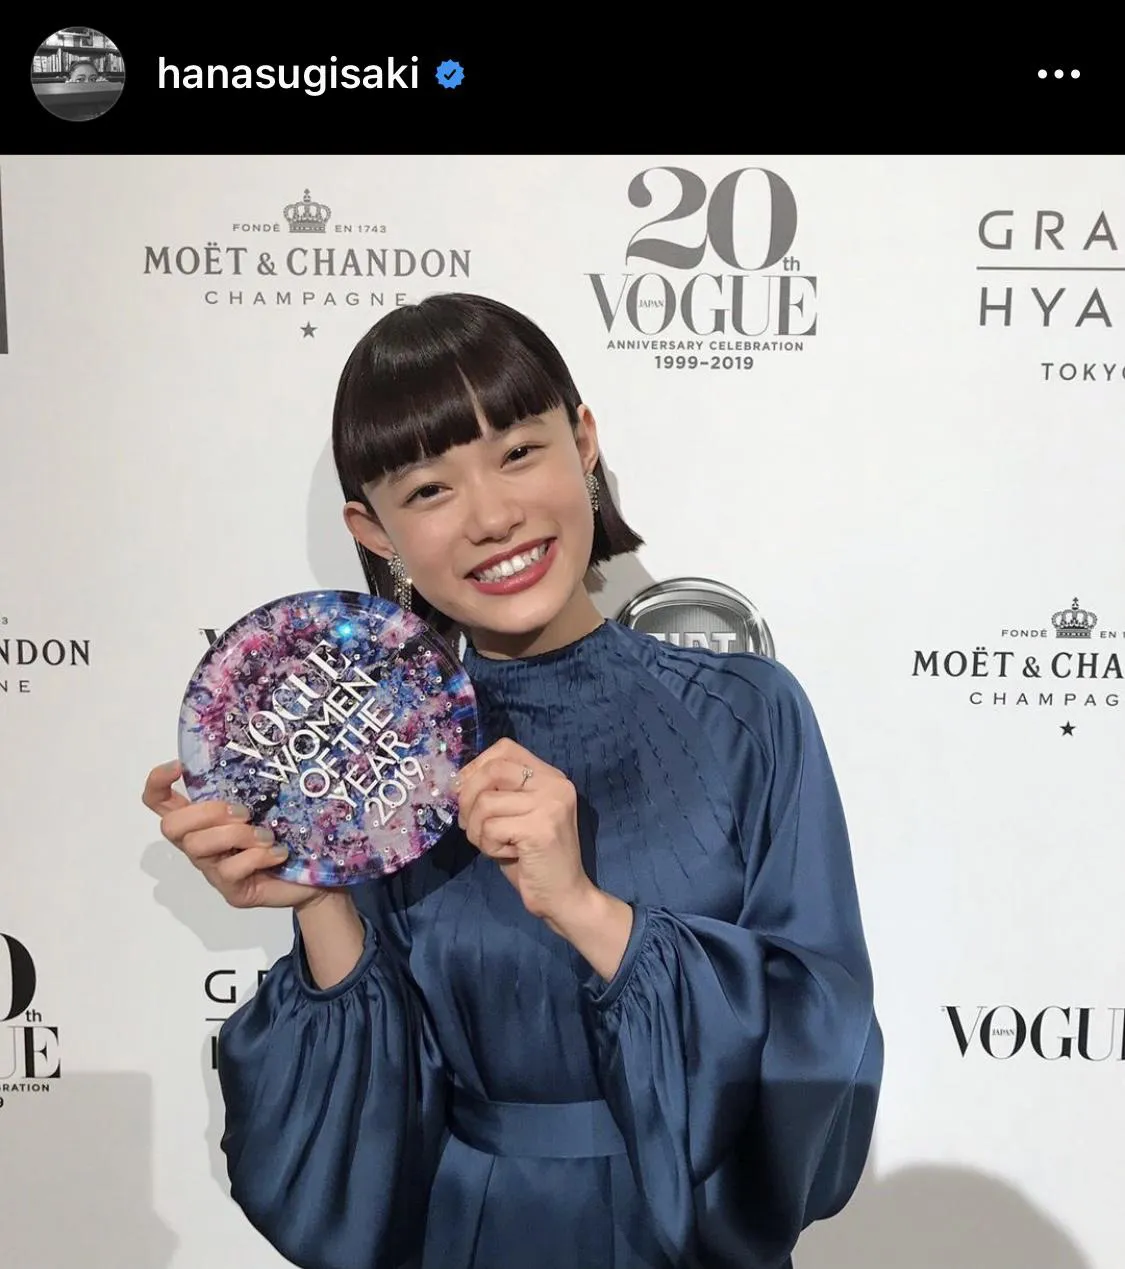 「VOGUE JAPAN Women of the year 2019」受賞に喜びの表情をみせる杉咲花